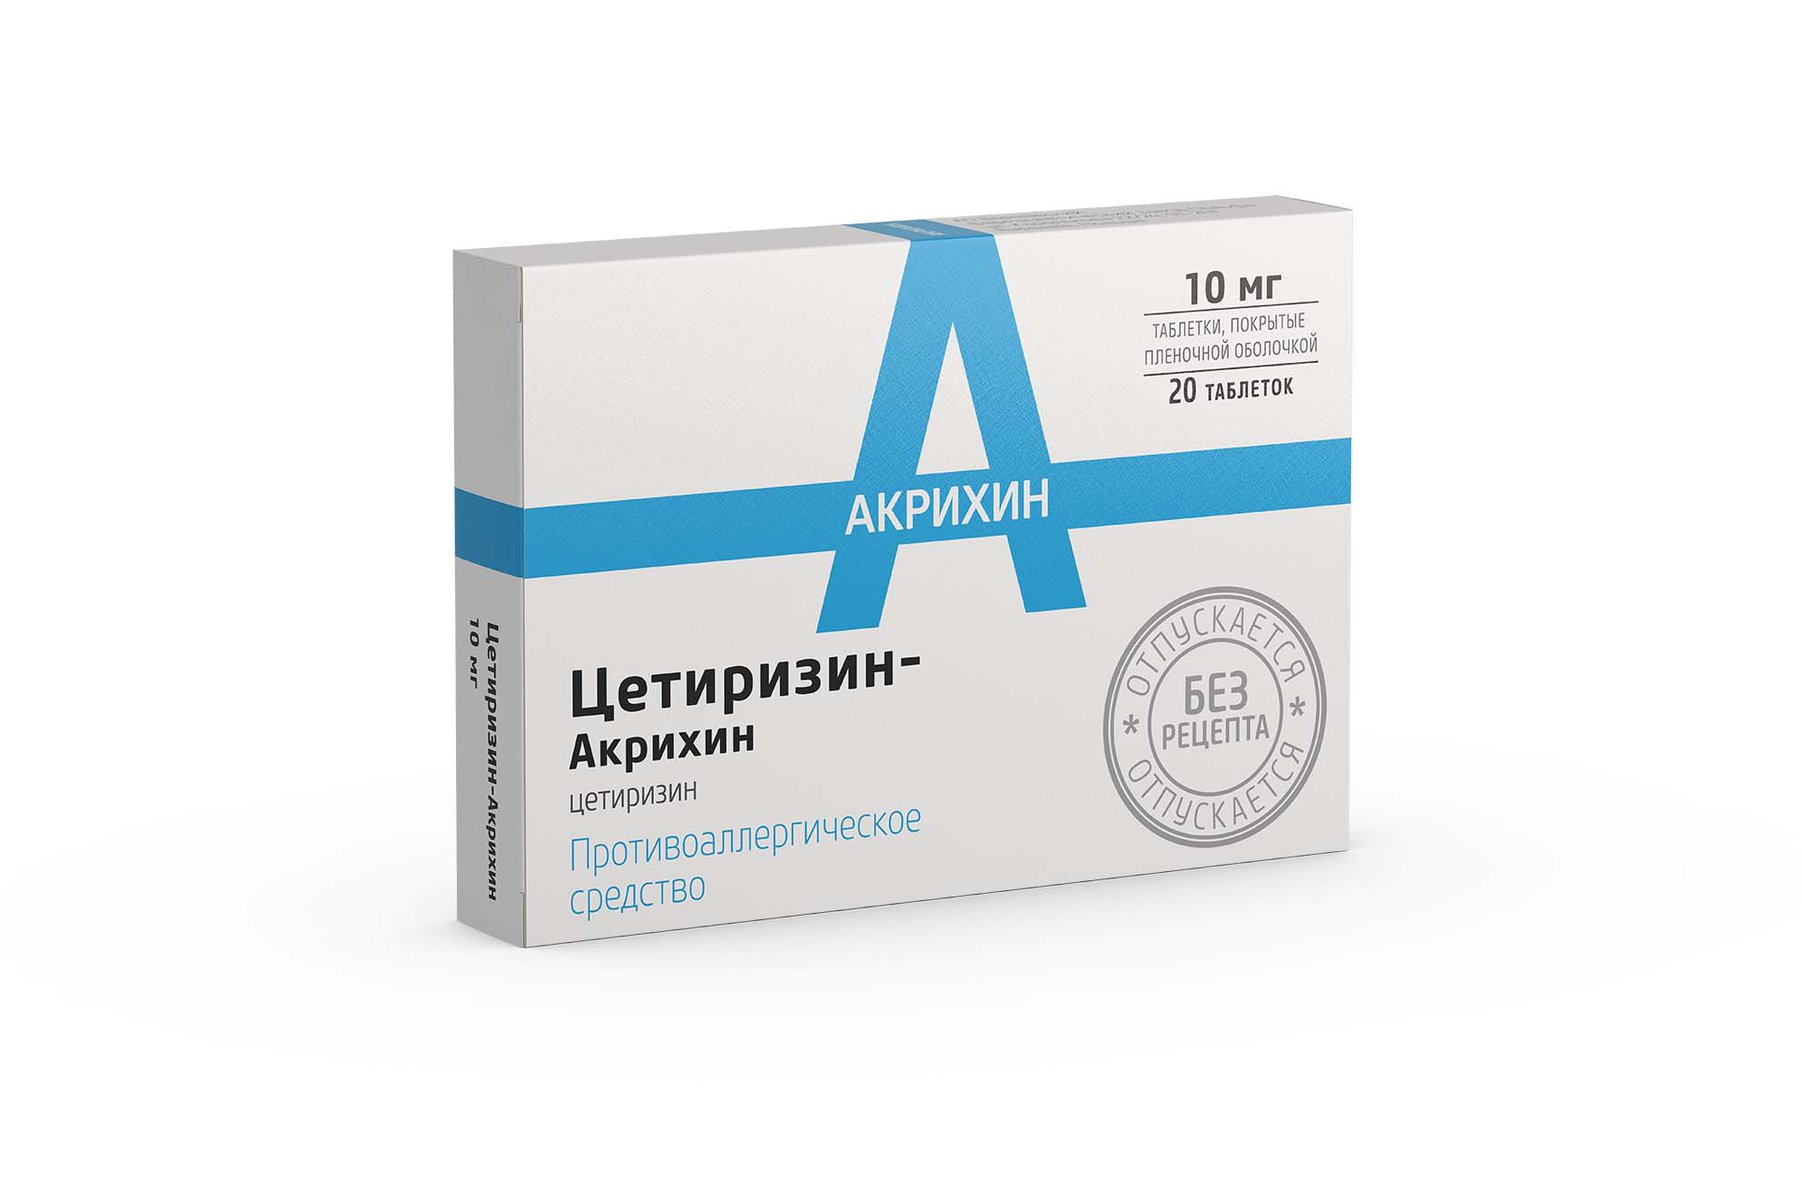 Цетиризин-Aкрихин (таблетки, 20 шт, 10 мг, для приема внутрь) - цена .